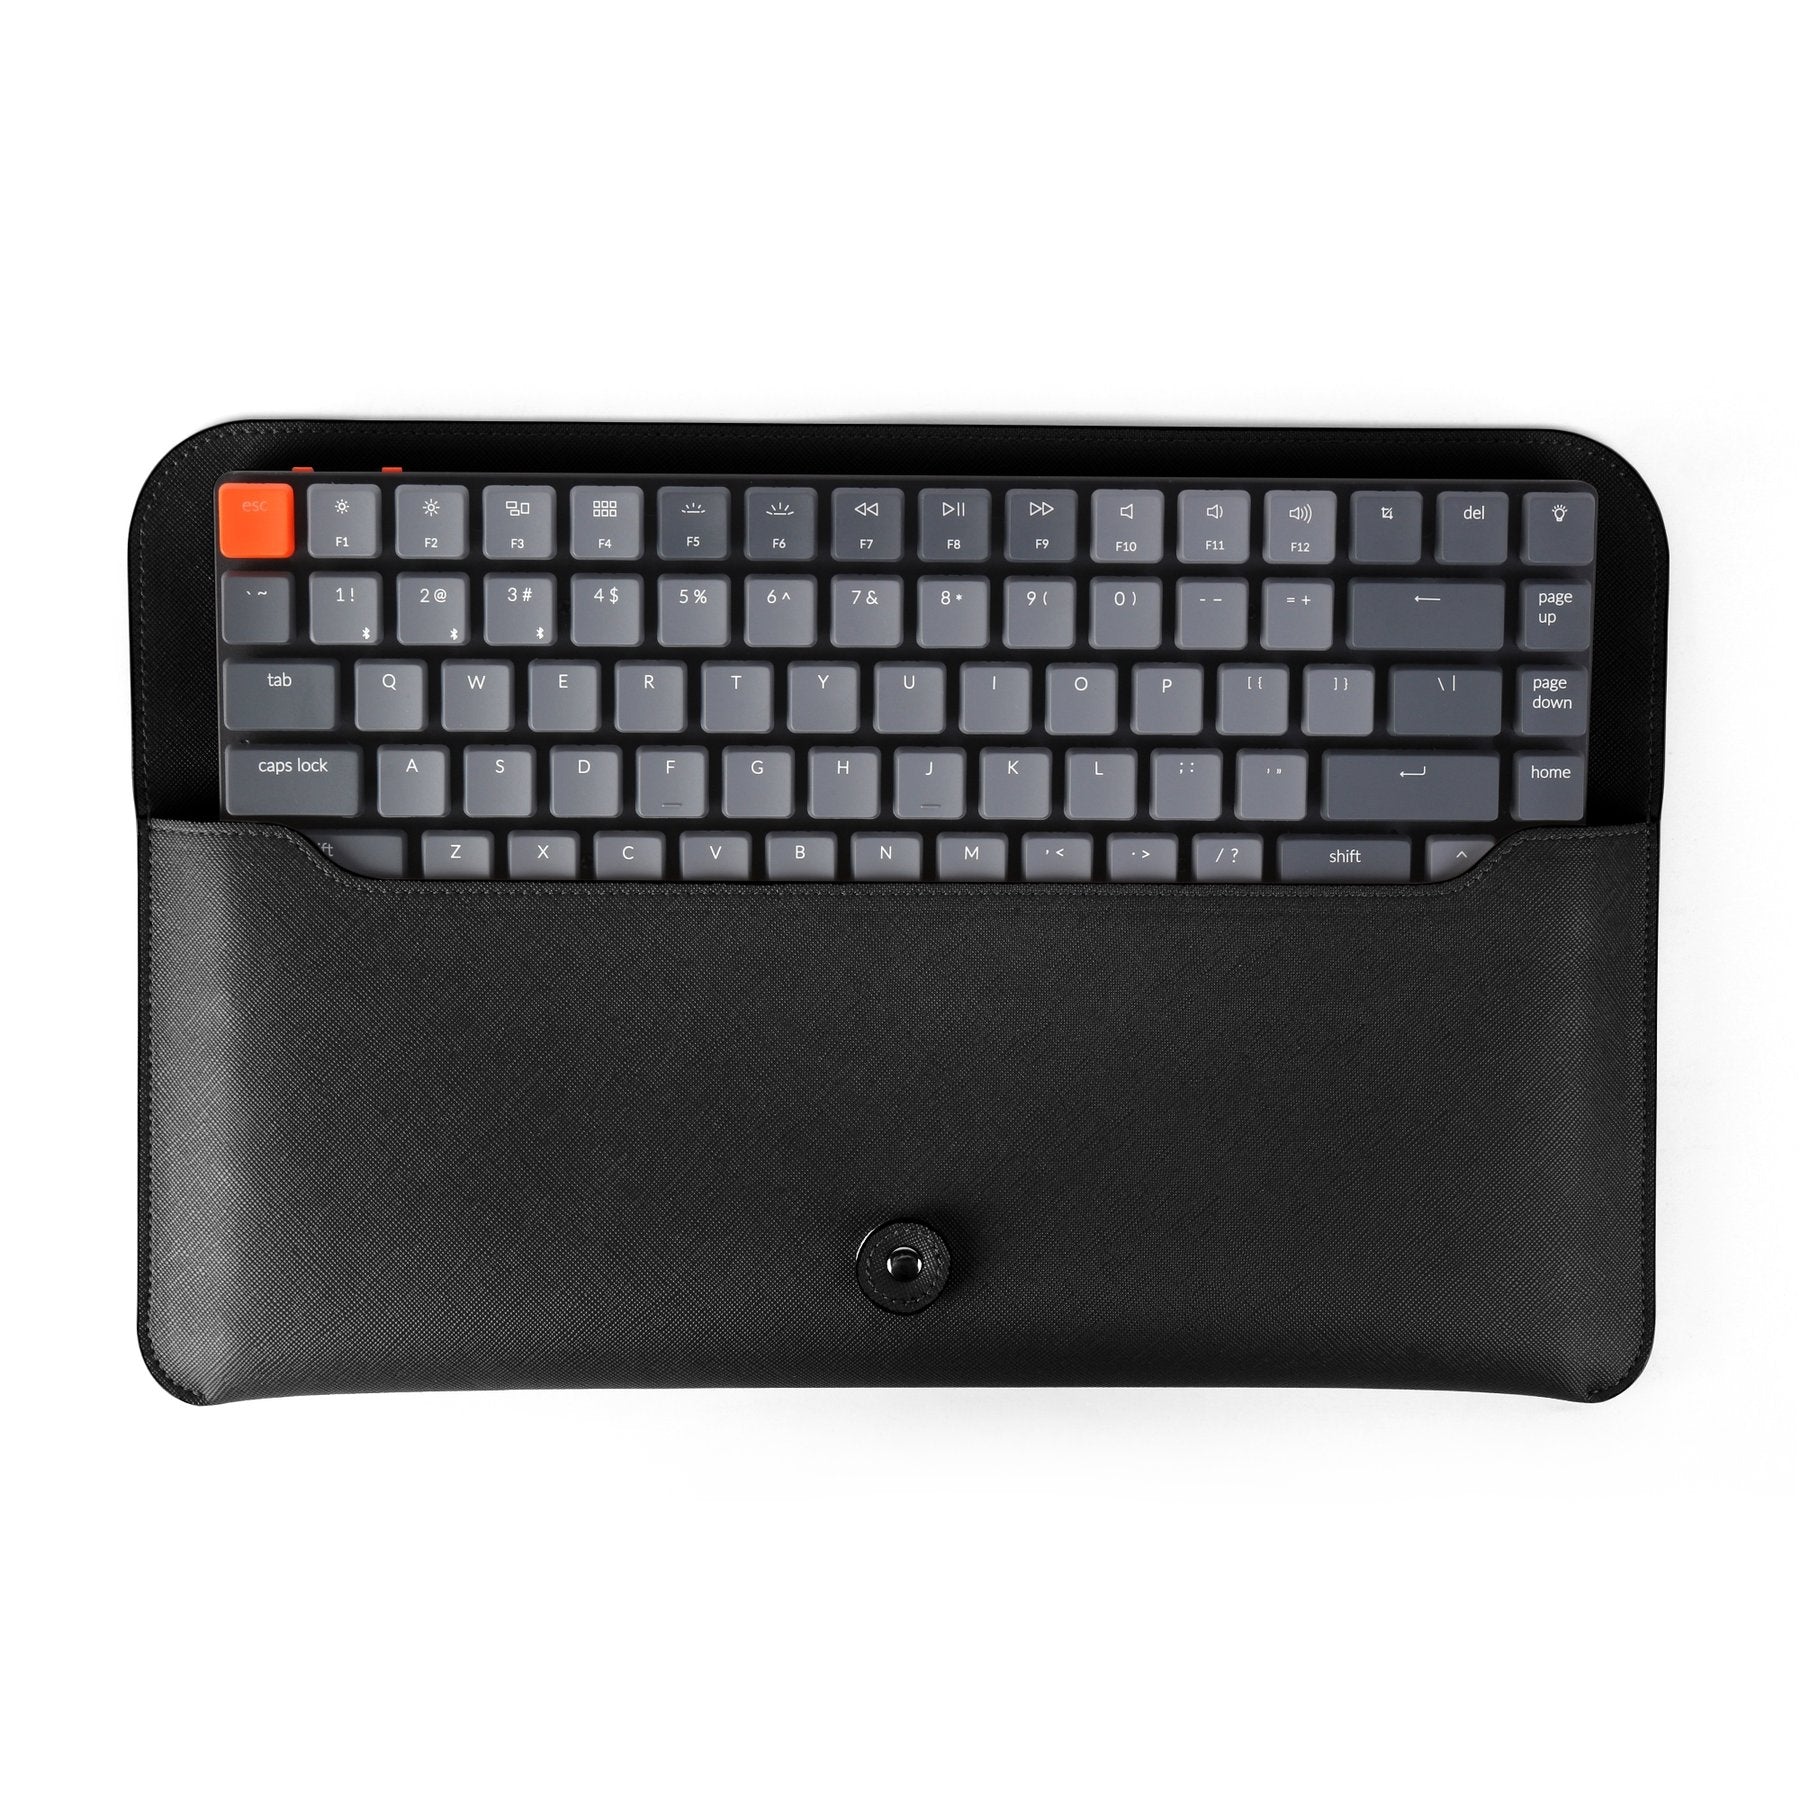 Keychron K3 / K12 Keyboard Bag - Black Saffiano Leather Keyboard Carrying Case MKBWS1OAMV |27343|